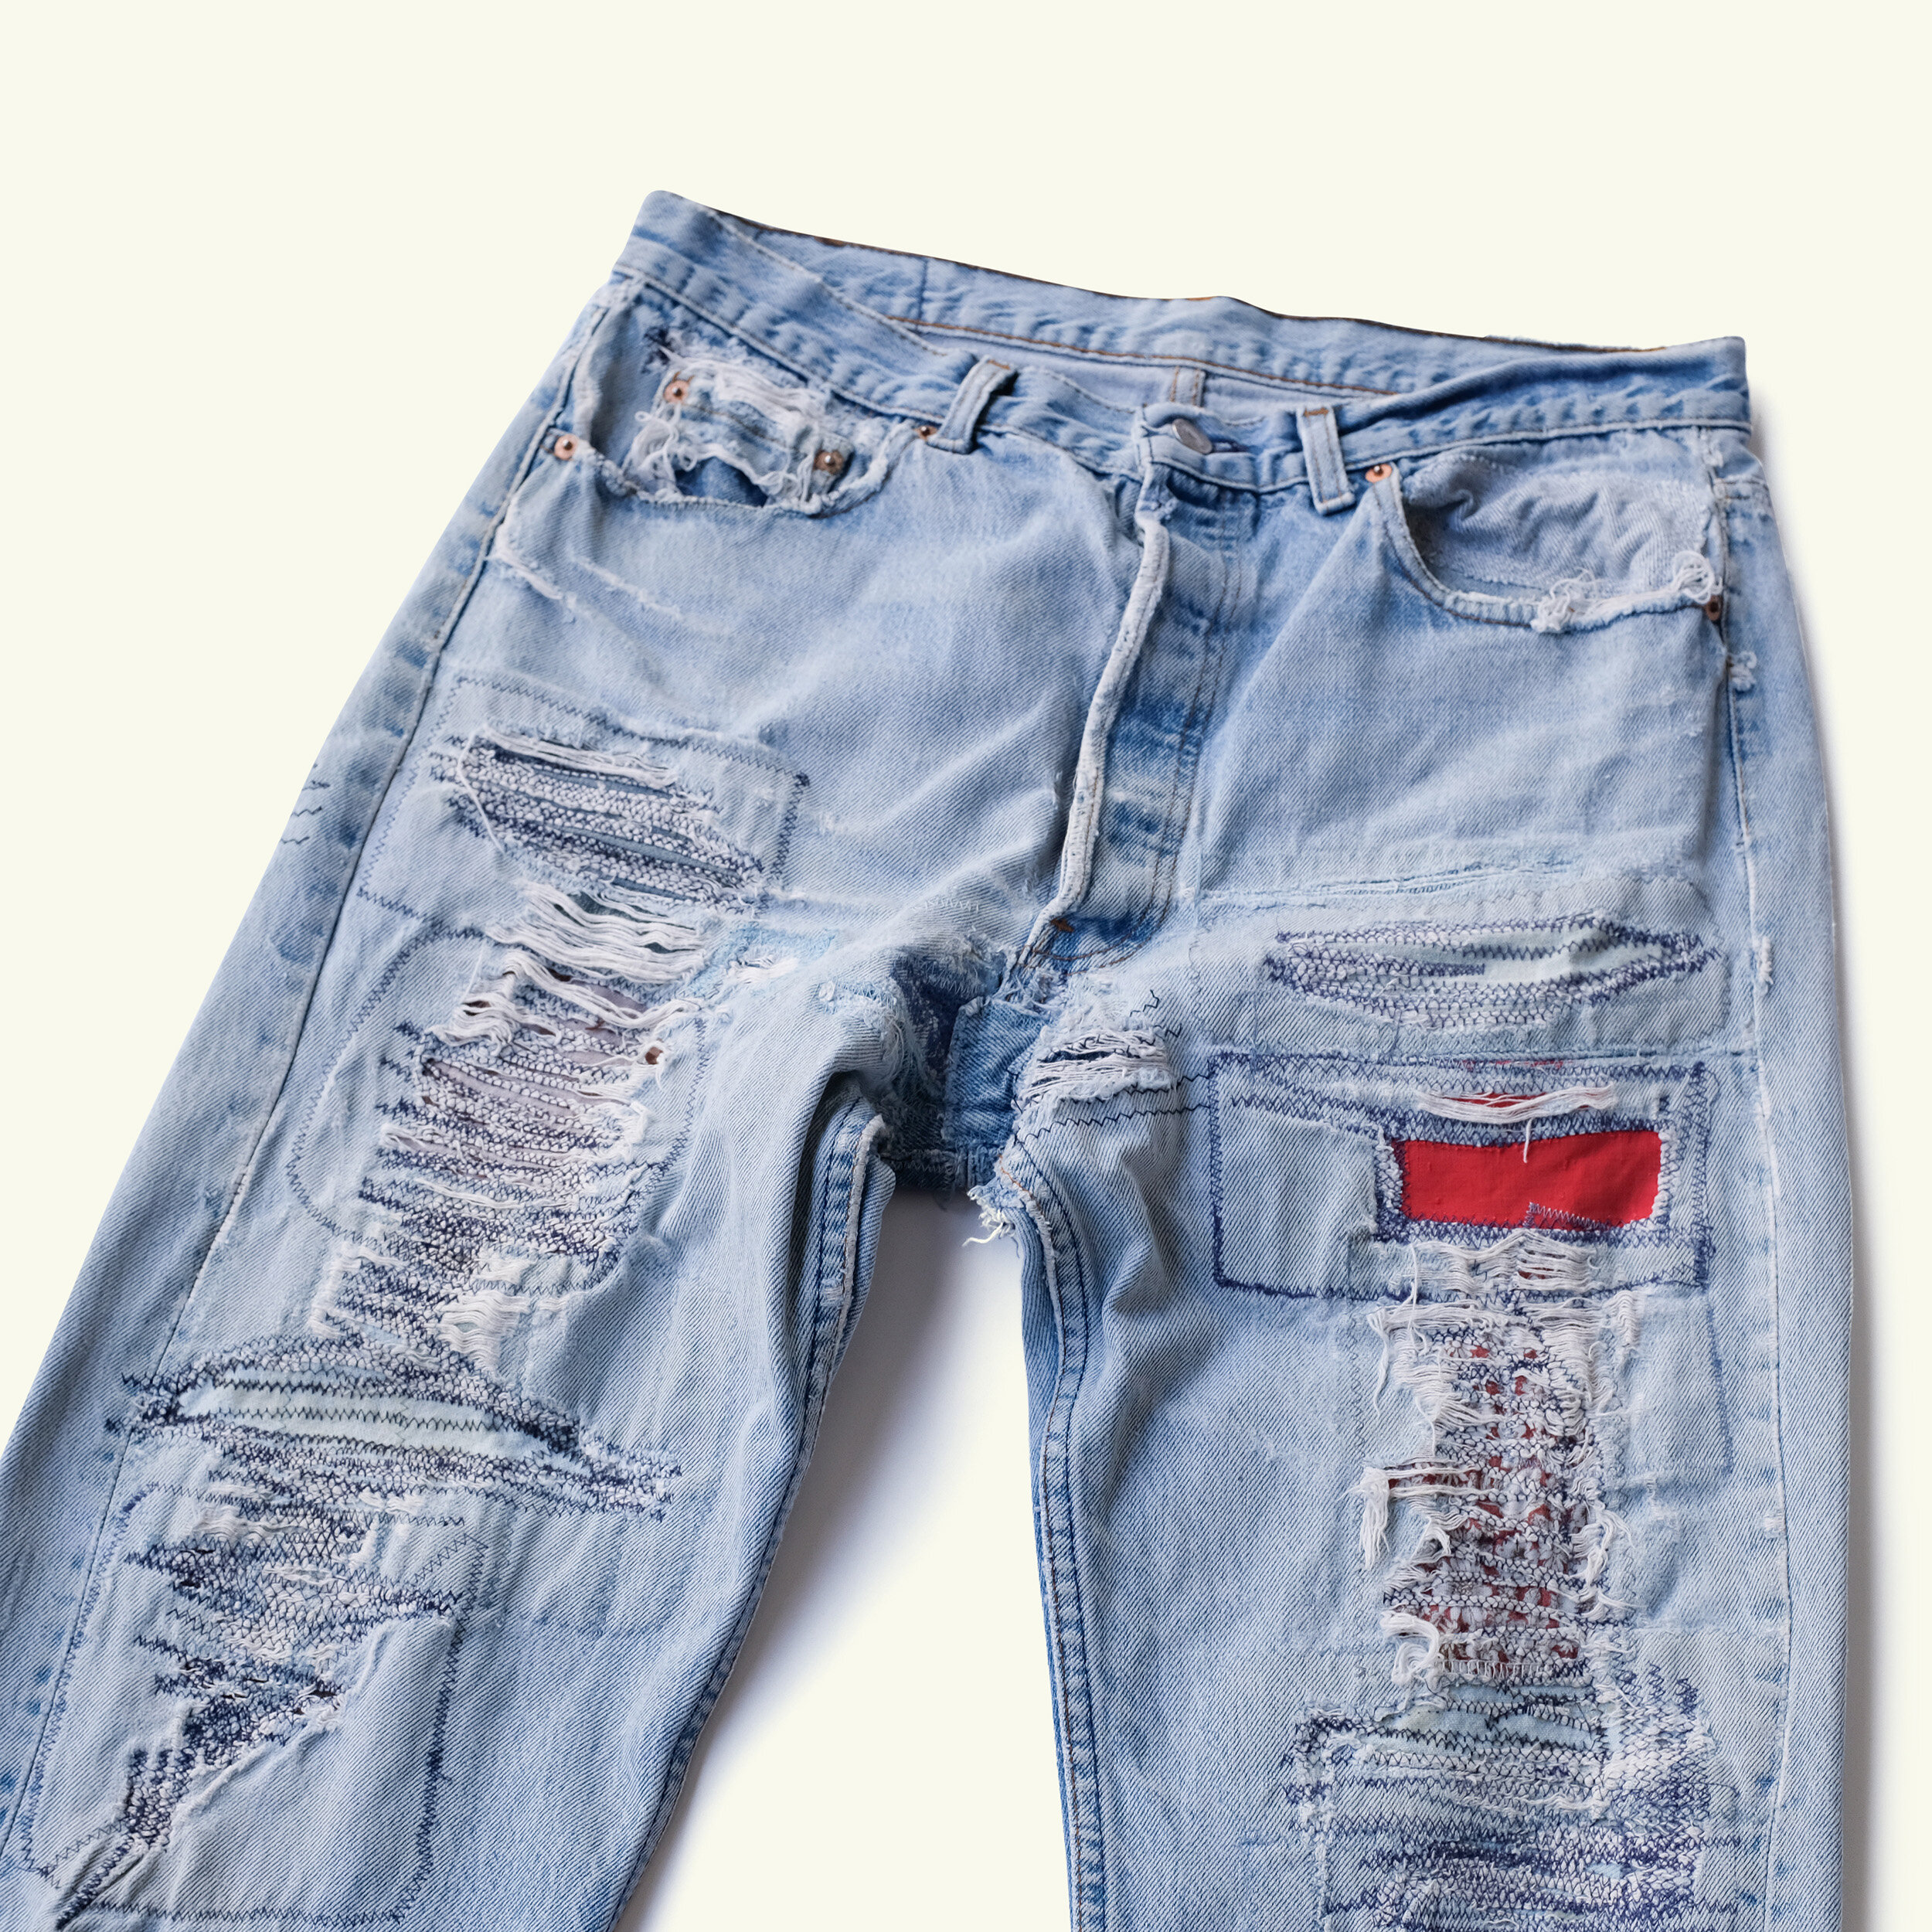 levi's 501 distressed jeans